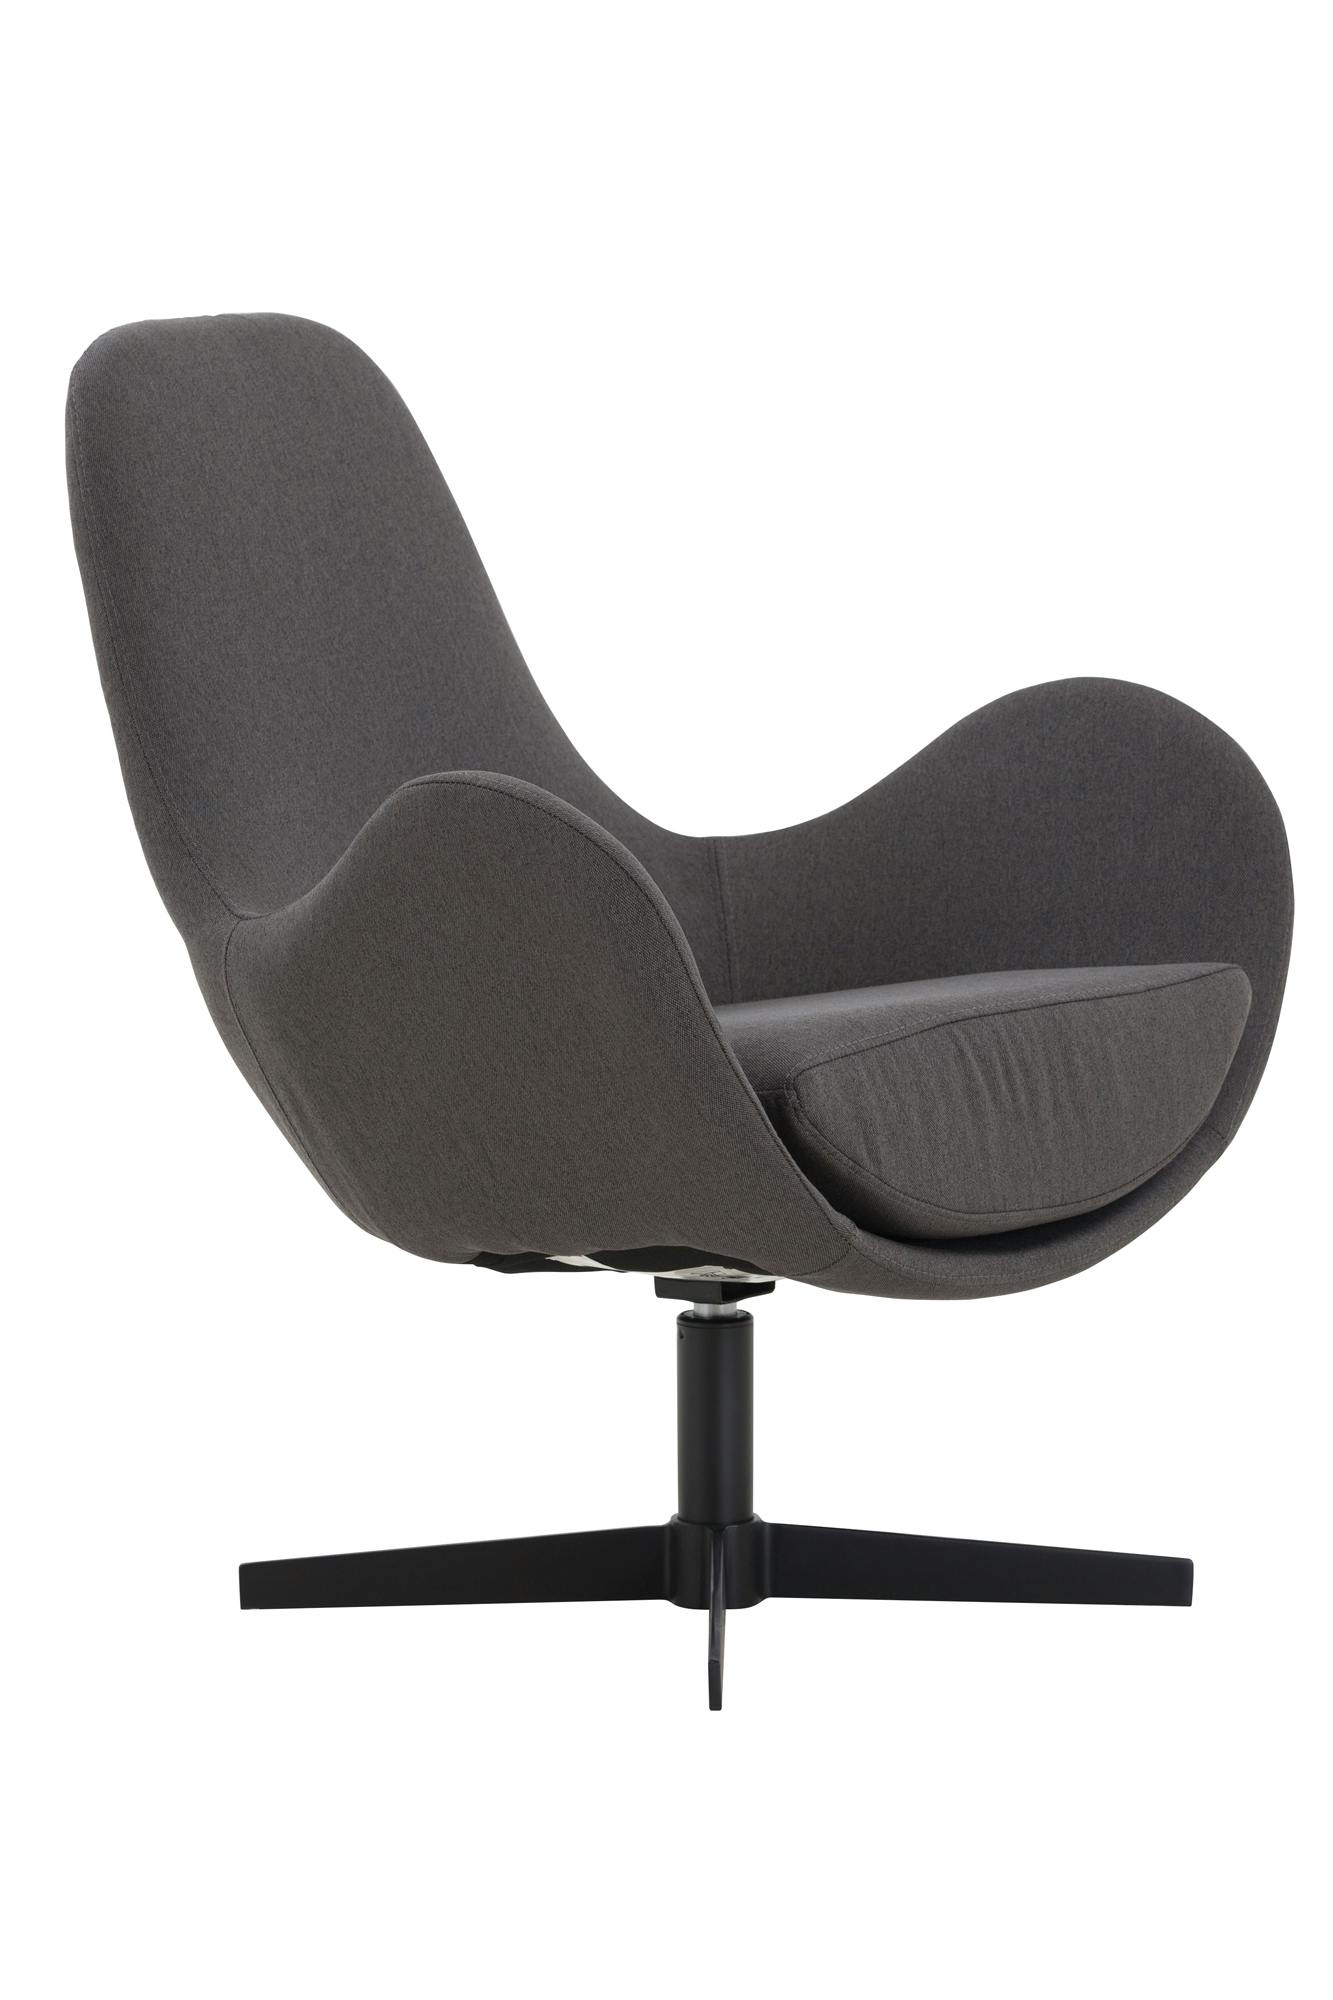 SalesFever Polster-Sessel | mit Drehfunktion | Bezug Textil | Gestell  Metall | B 72 x T 69 x H 85 cm | dunkelgrau-schwarz | METRO Marktplatz